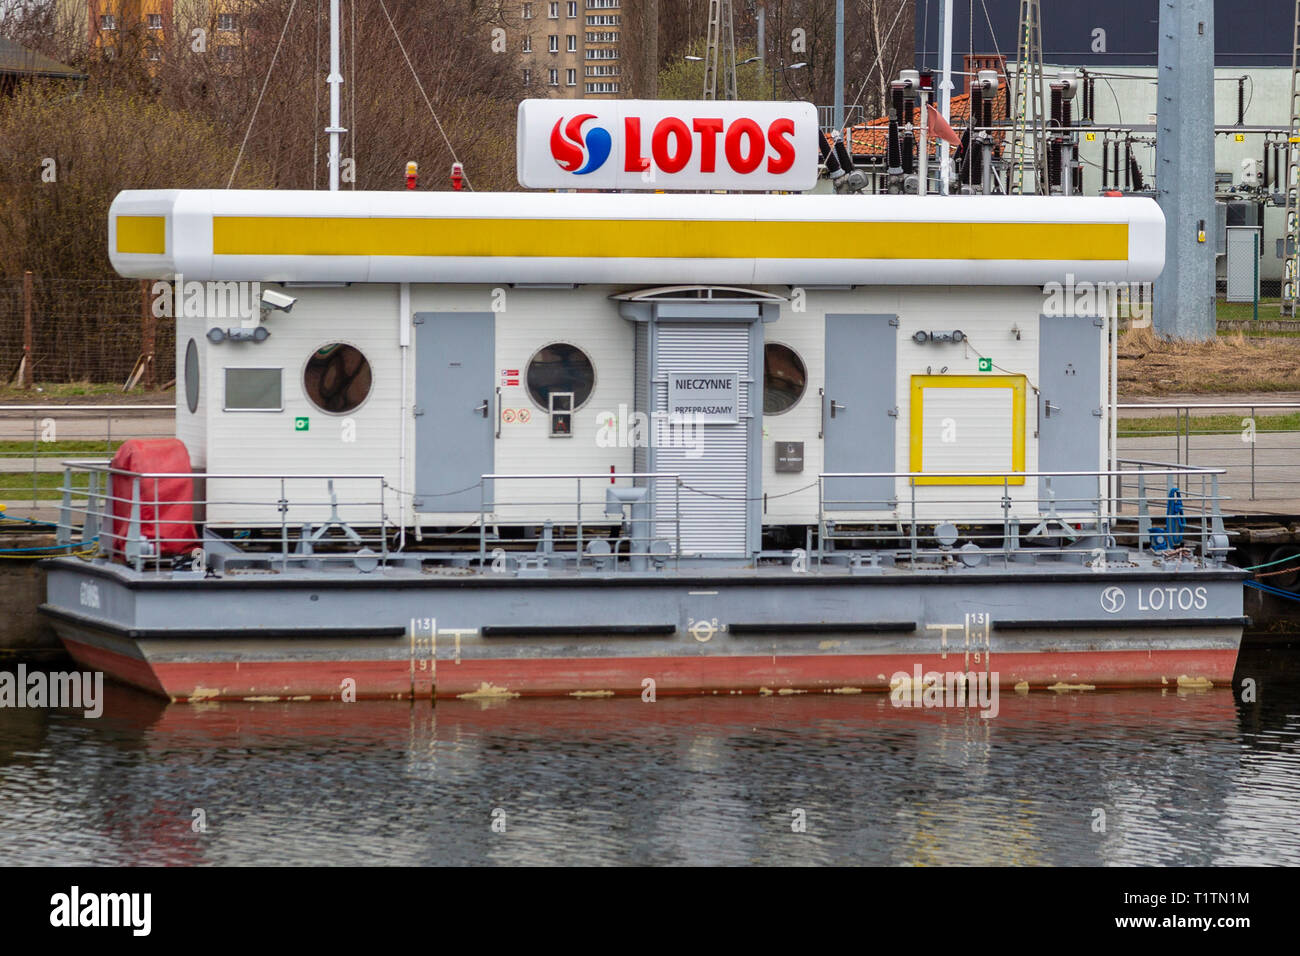 Lotos Boat Petrol Filling Station on Motlawa River, Gdansk, Poland Stock Photo